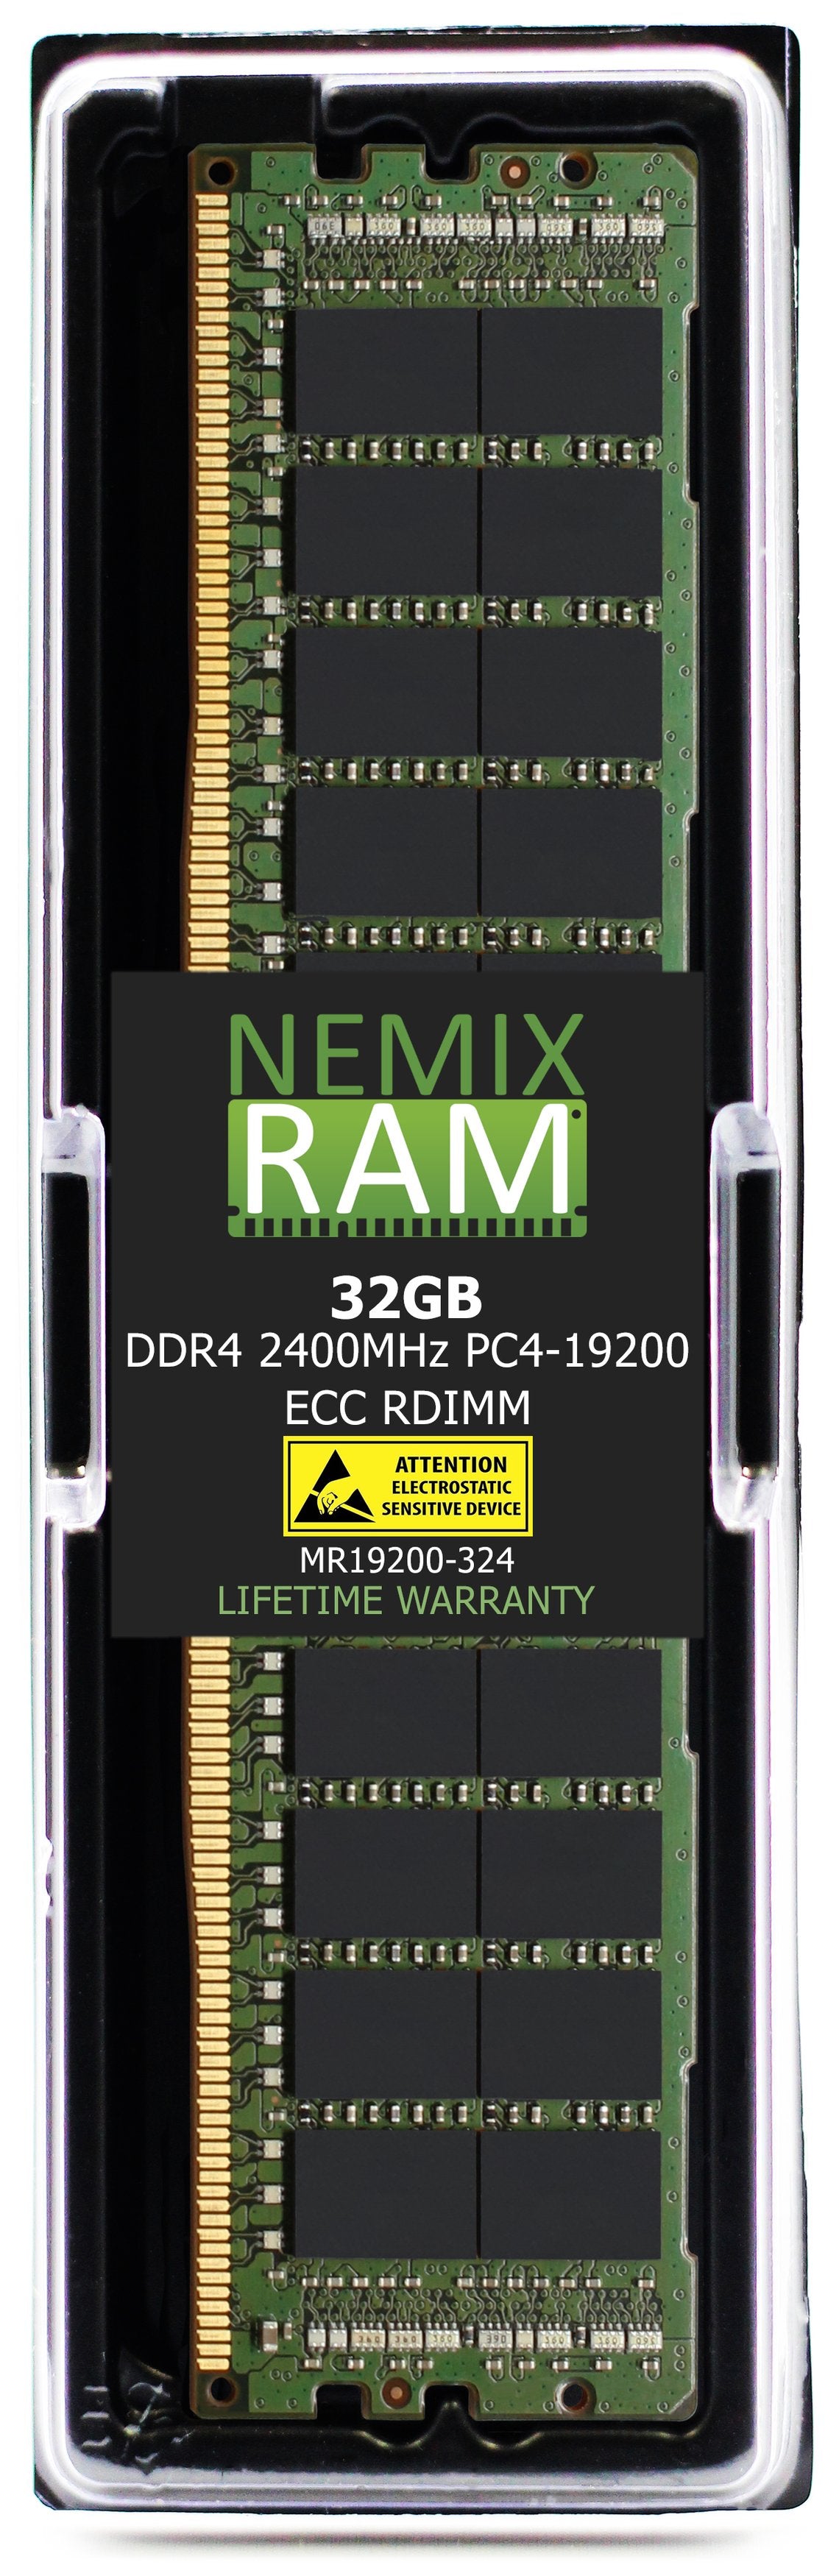 32GB DDR4 2400MHZ PC4-19200 RDIMM Compatible with Supermicro MEM-DR432L-SL02-ER24